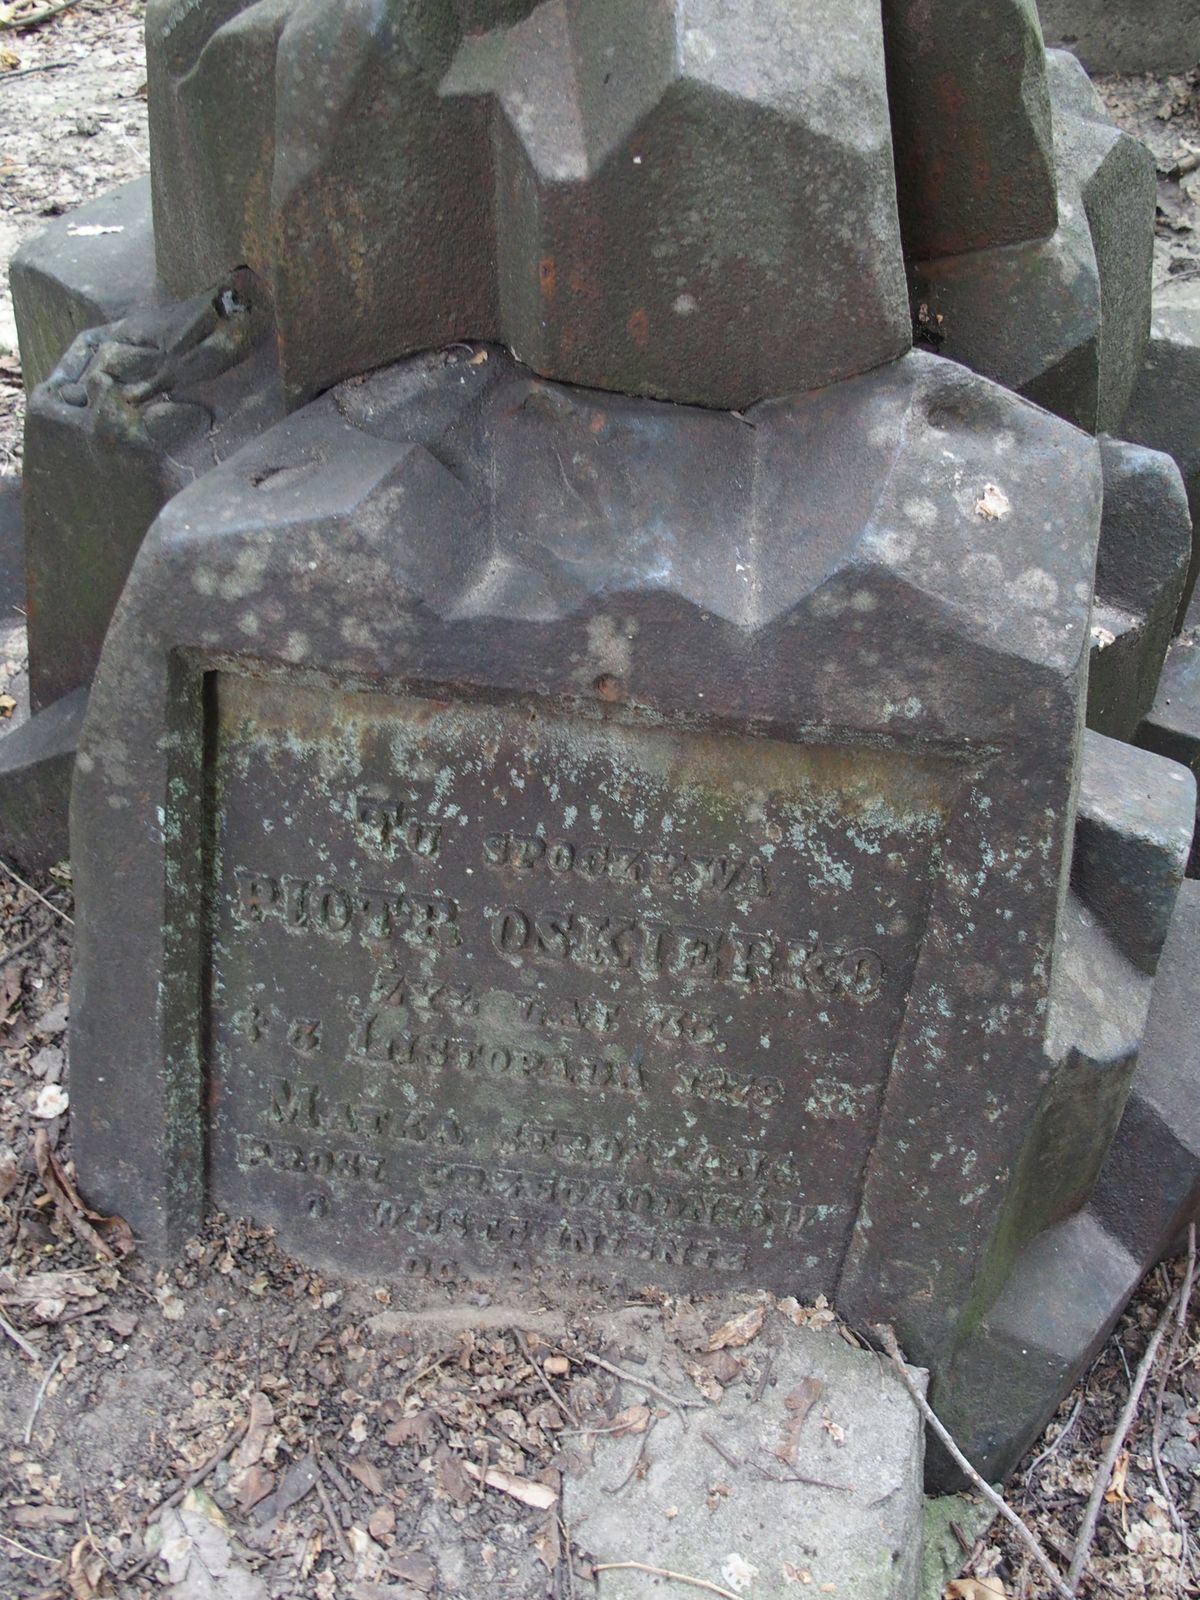 Fragment of Petr Oskierko's tombstone, Baikal cemetery, Kyiv, as of 2021